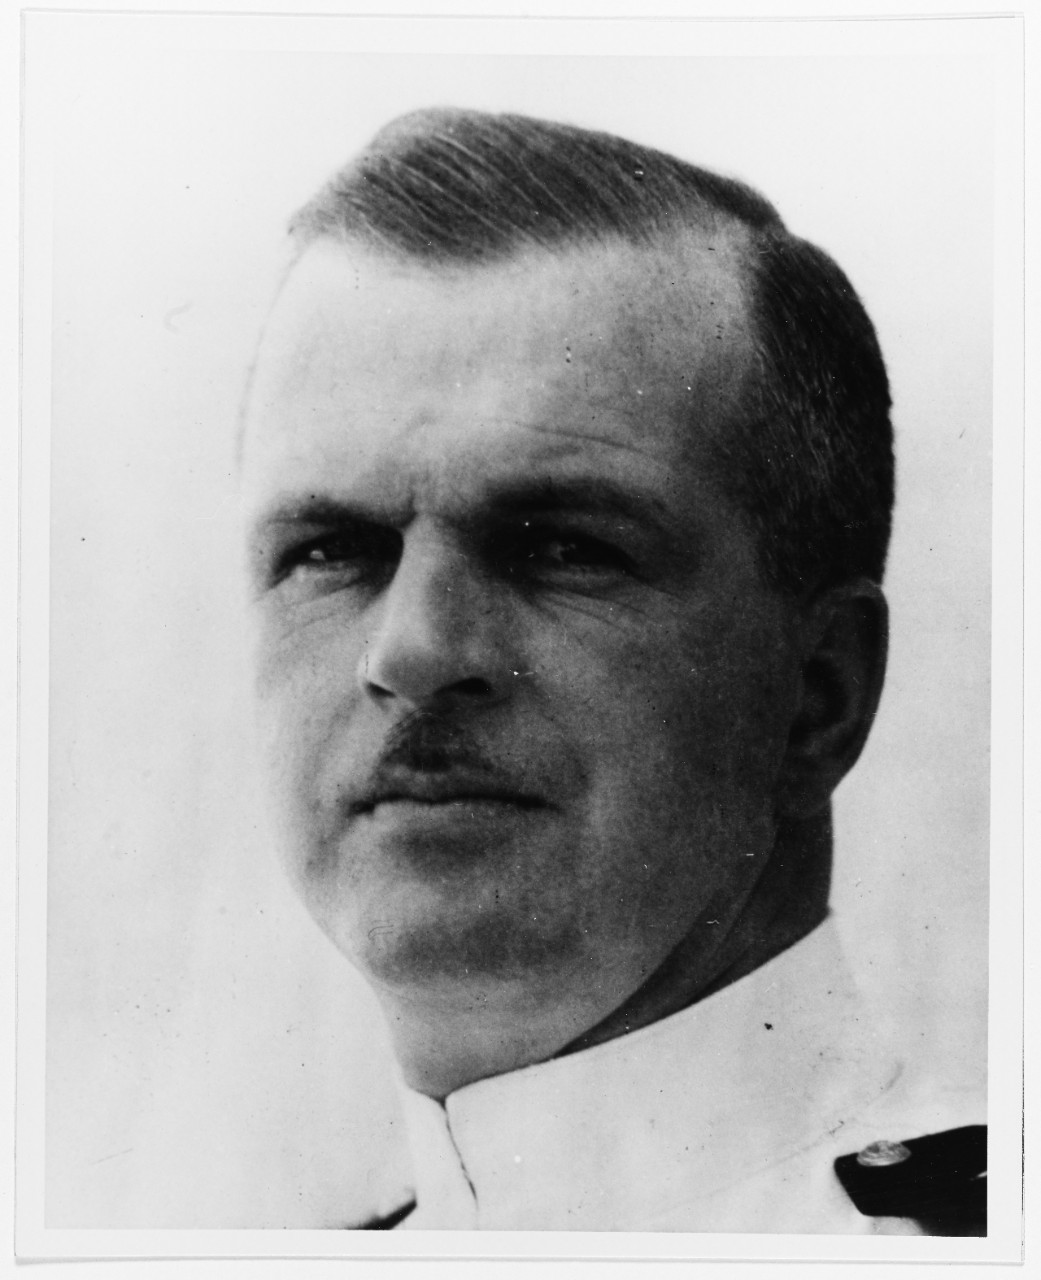 Lieutenant Harry R. Thurber, USN